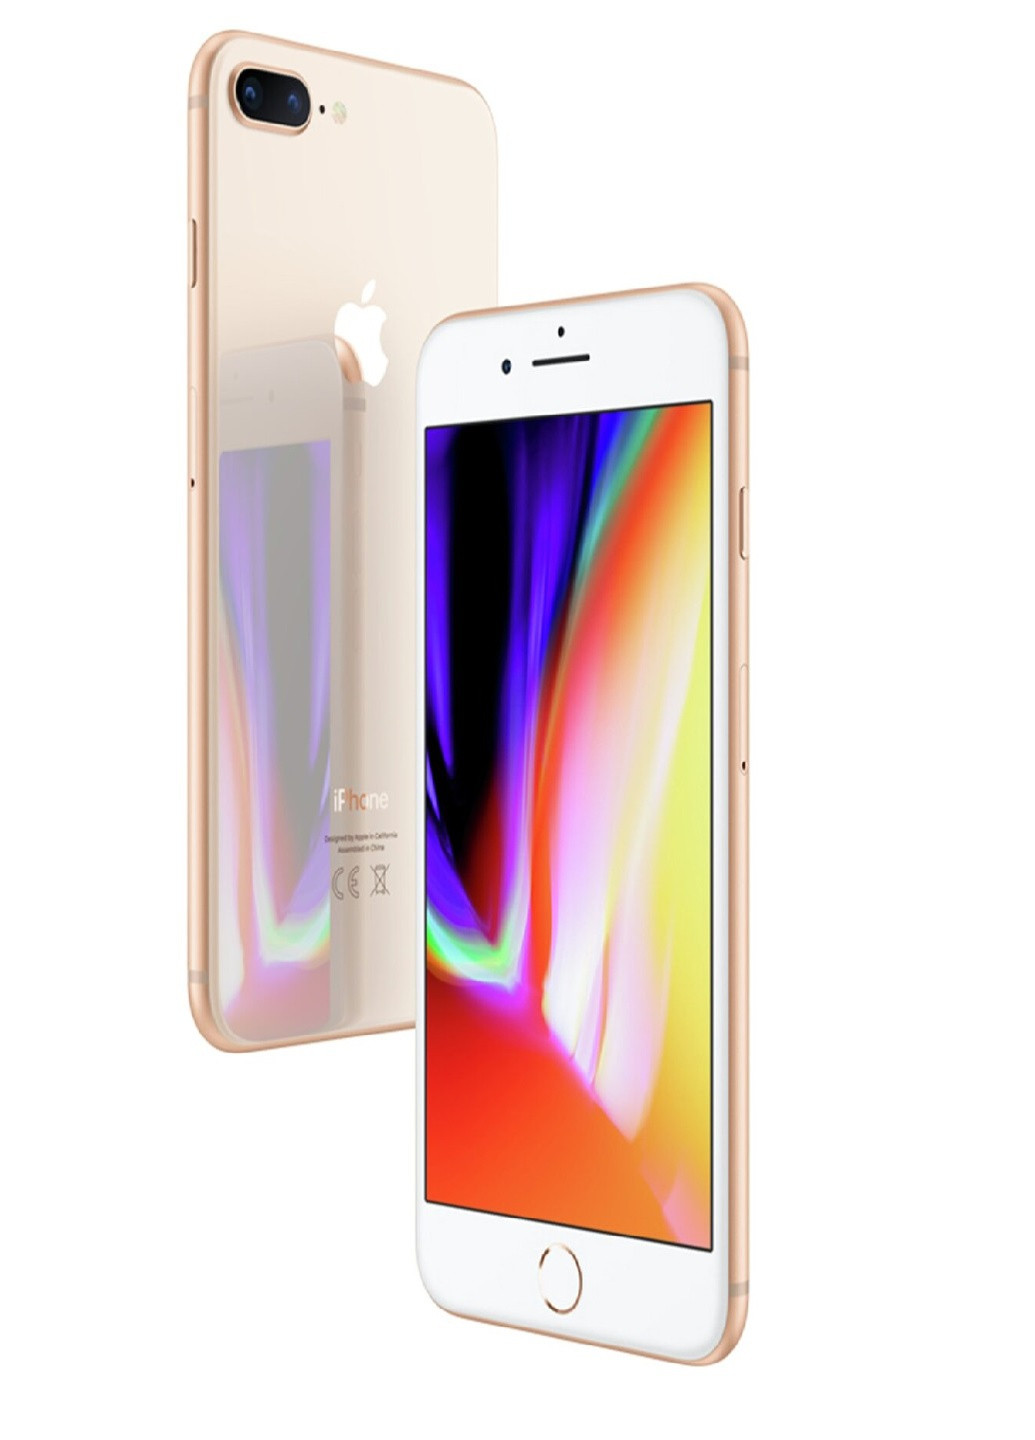 iPhone 8 Plus 64Gb (Gold) (MQ8N2) Apple (242115855)